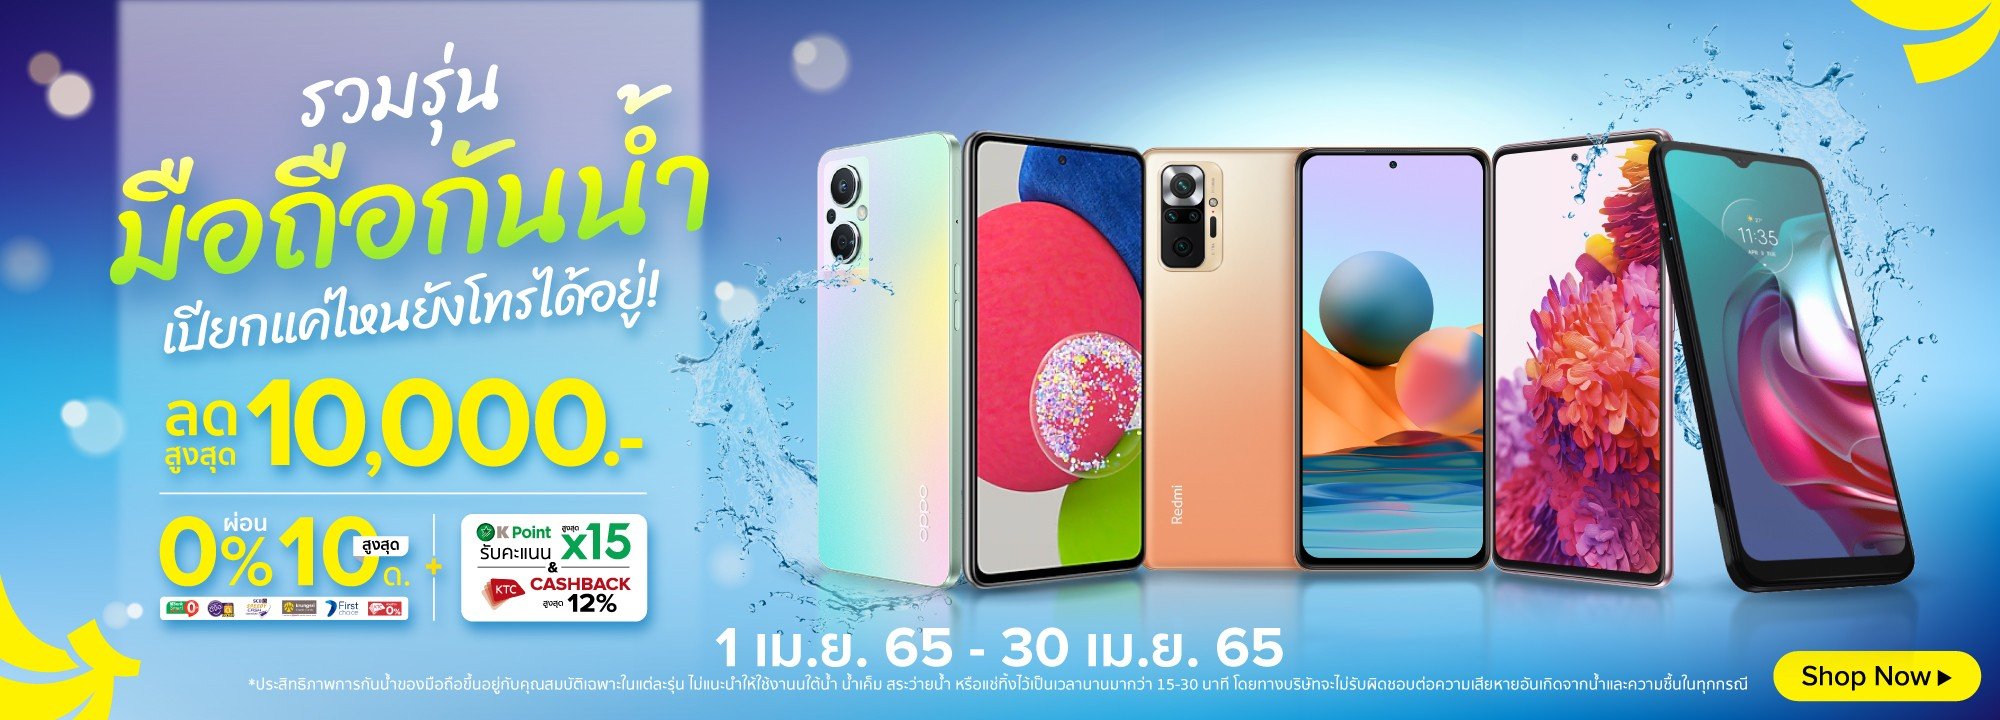 E-com_BNN_Smartphone_กันน้ำ_2000x720-homepage_desktop_banner_medium